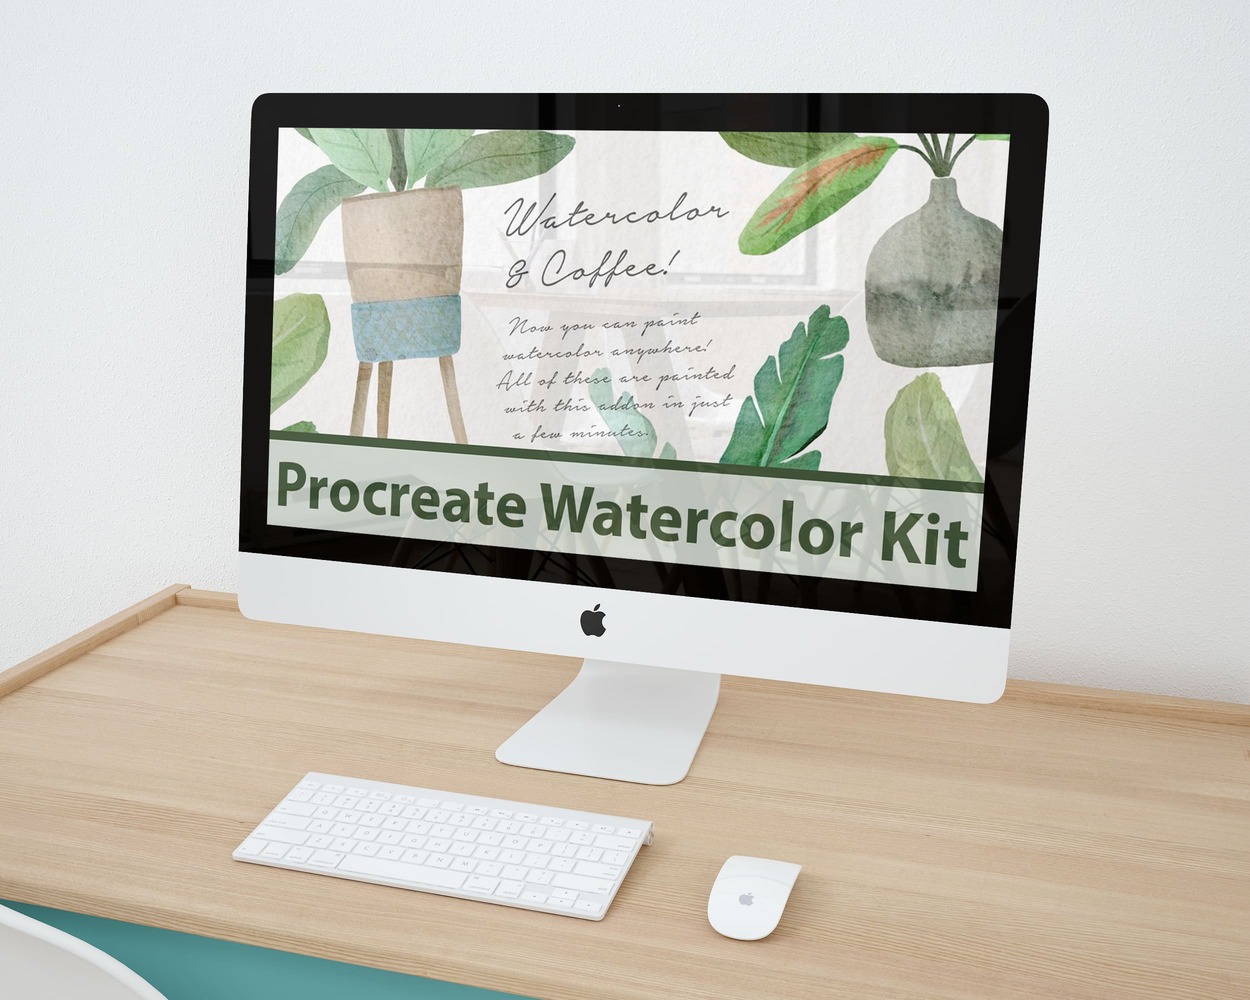 Procreate Watercolor Kit - "Watercolor & Coffee!" On The Monoblock.